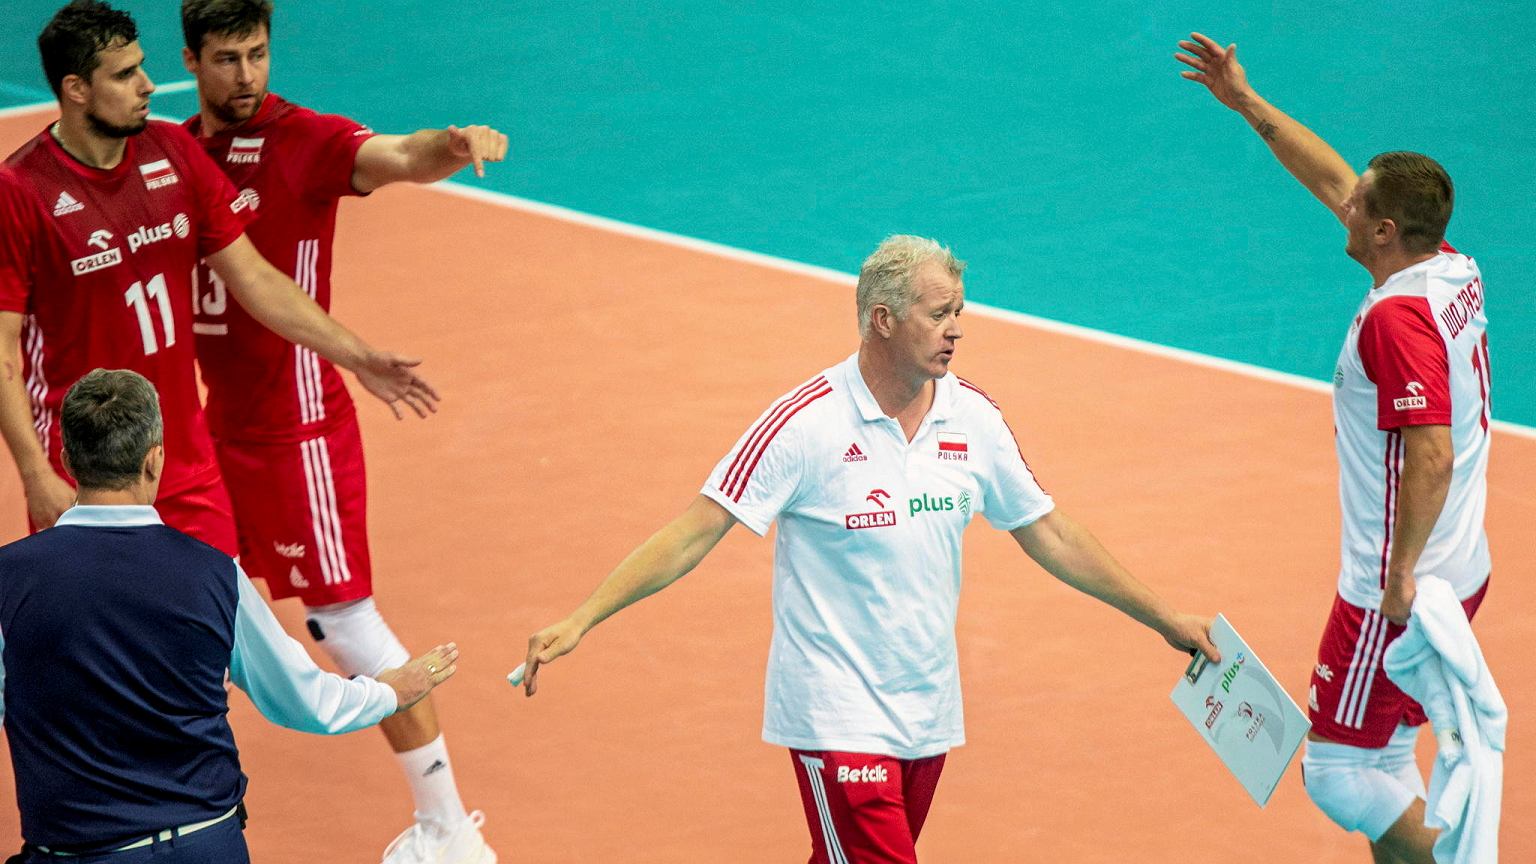 Vital Heinen says goodbye to the Polish national team